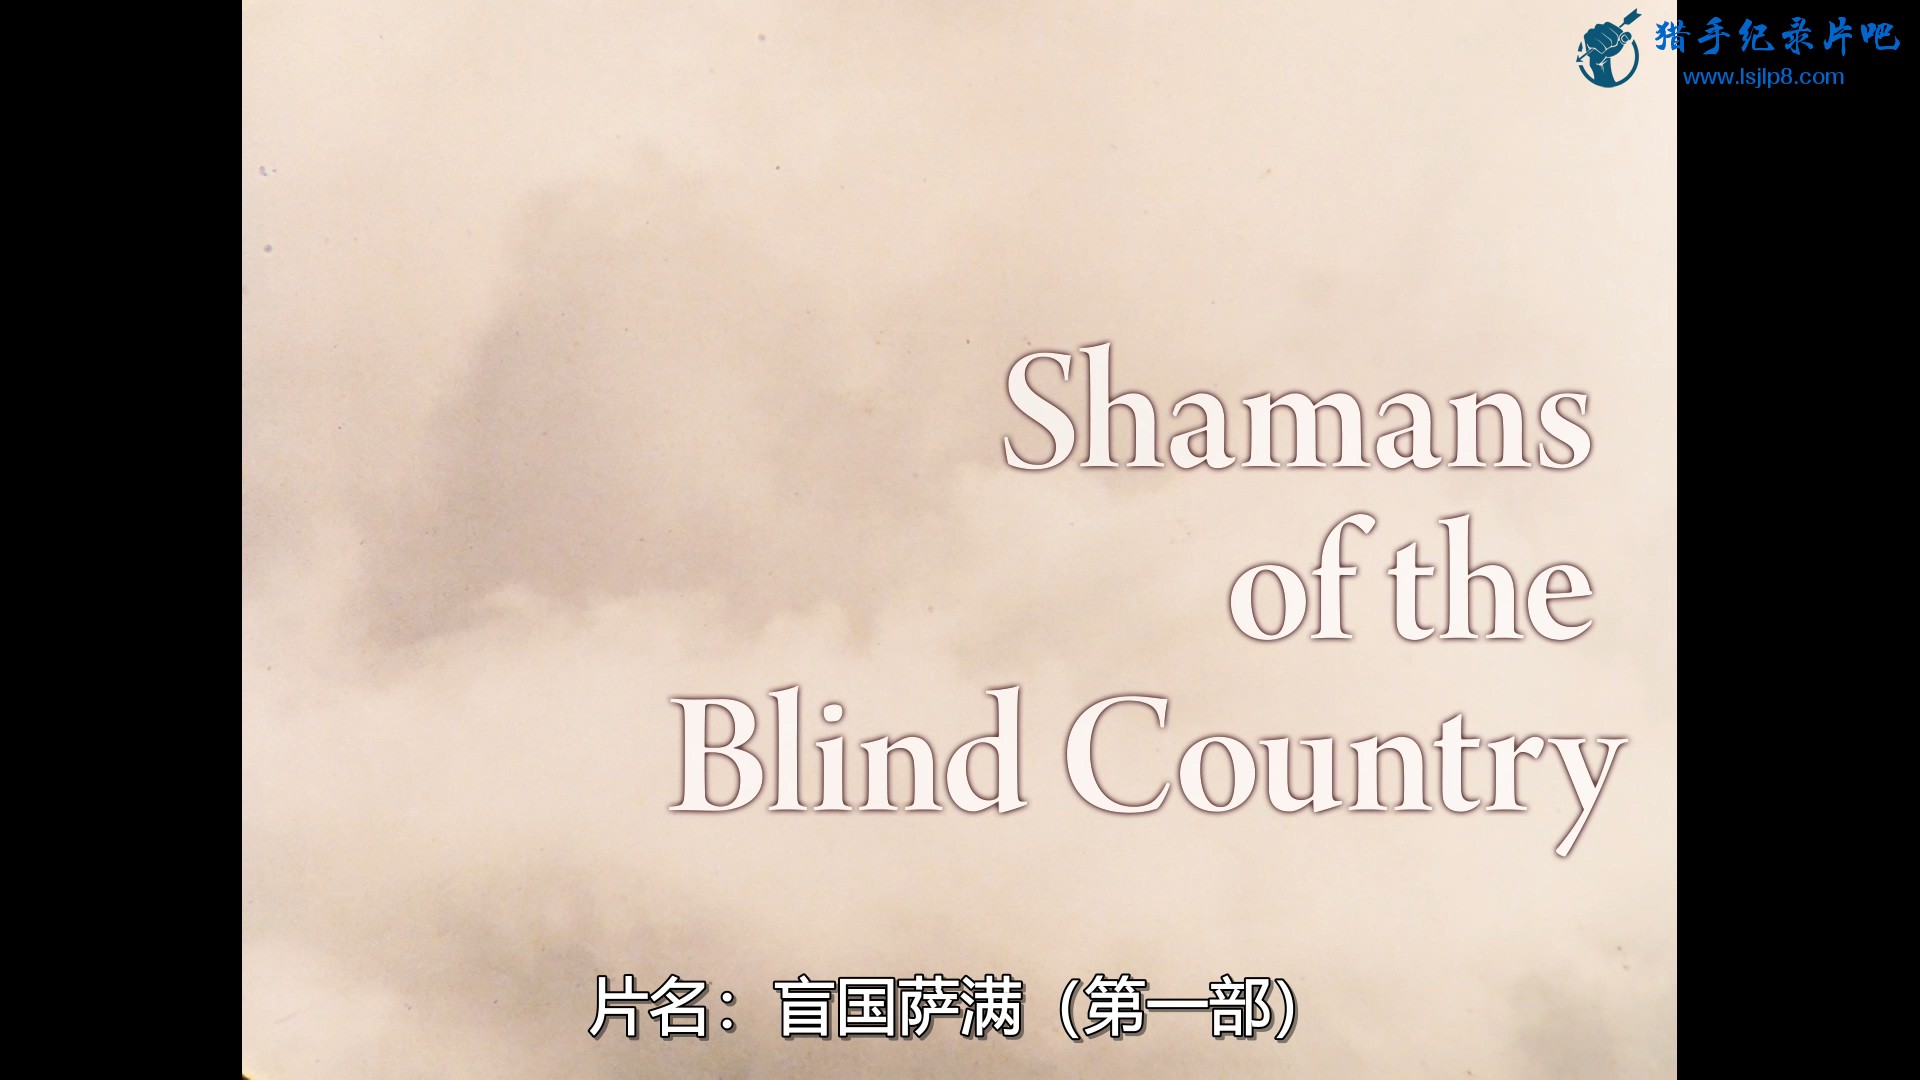 Shamans of the Blind Country.1981.1080p.Web-DL.KG.mkv_20211128_194443.332.jpg